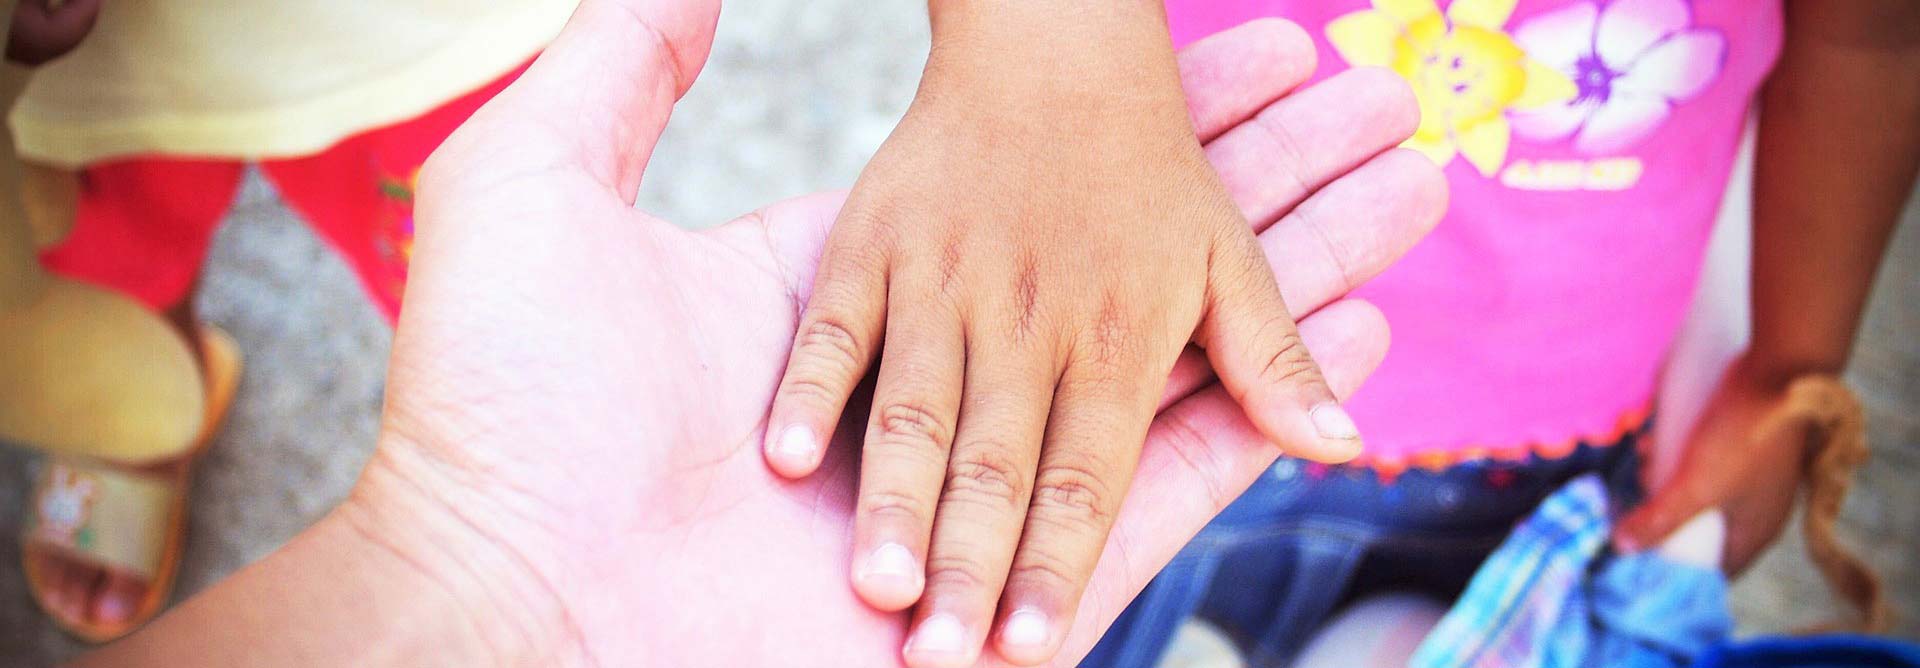 Child's hand on a nurse's signifying motivated nursing community